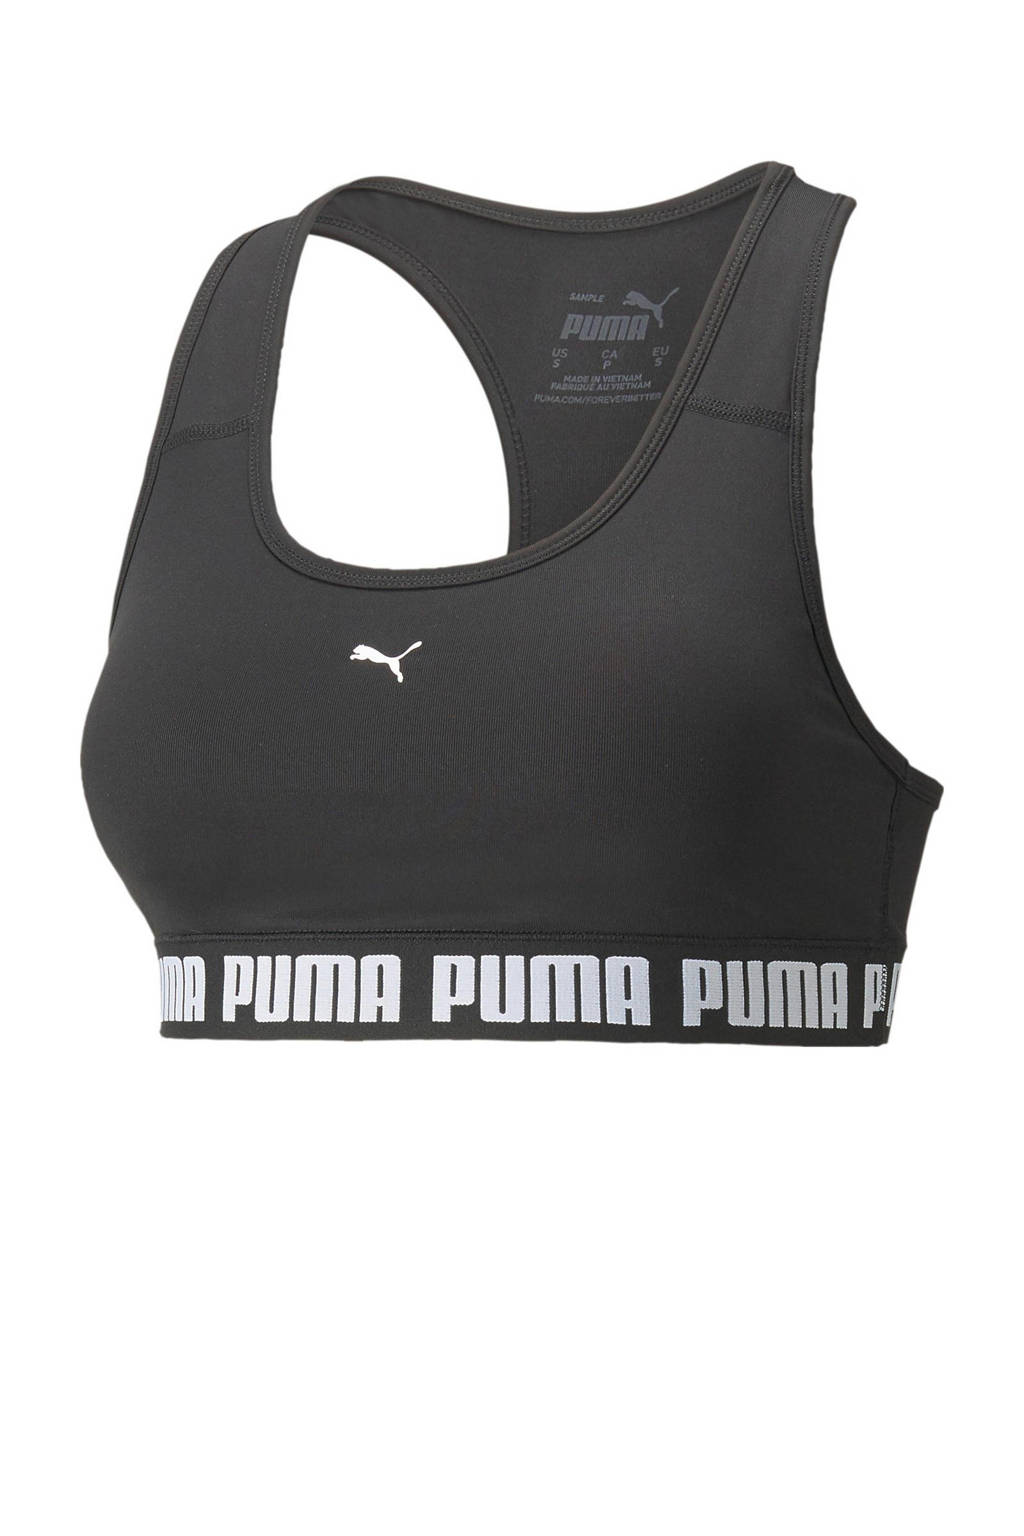 Puma level 3 sportbh zwart, Zwart